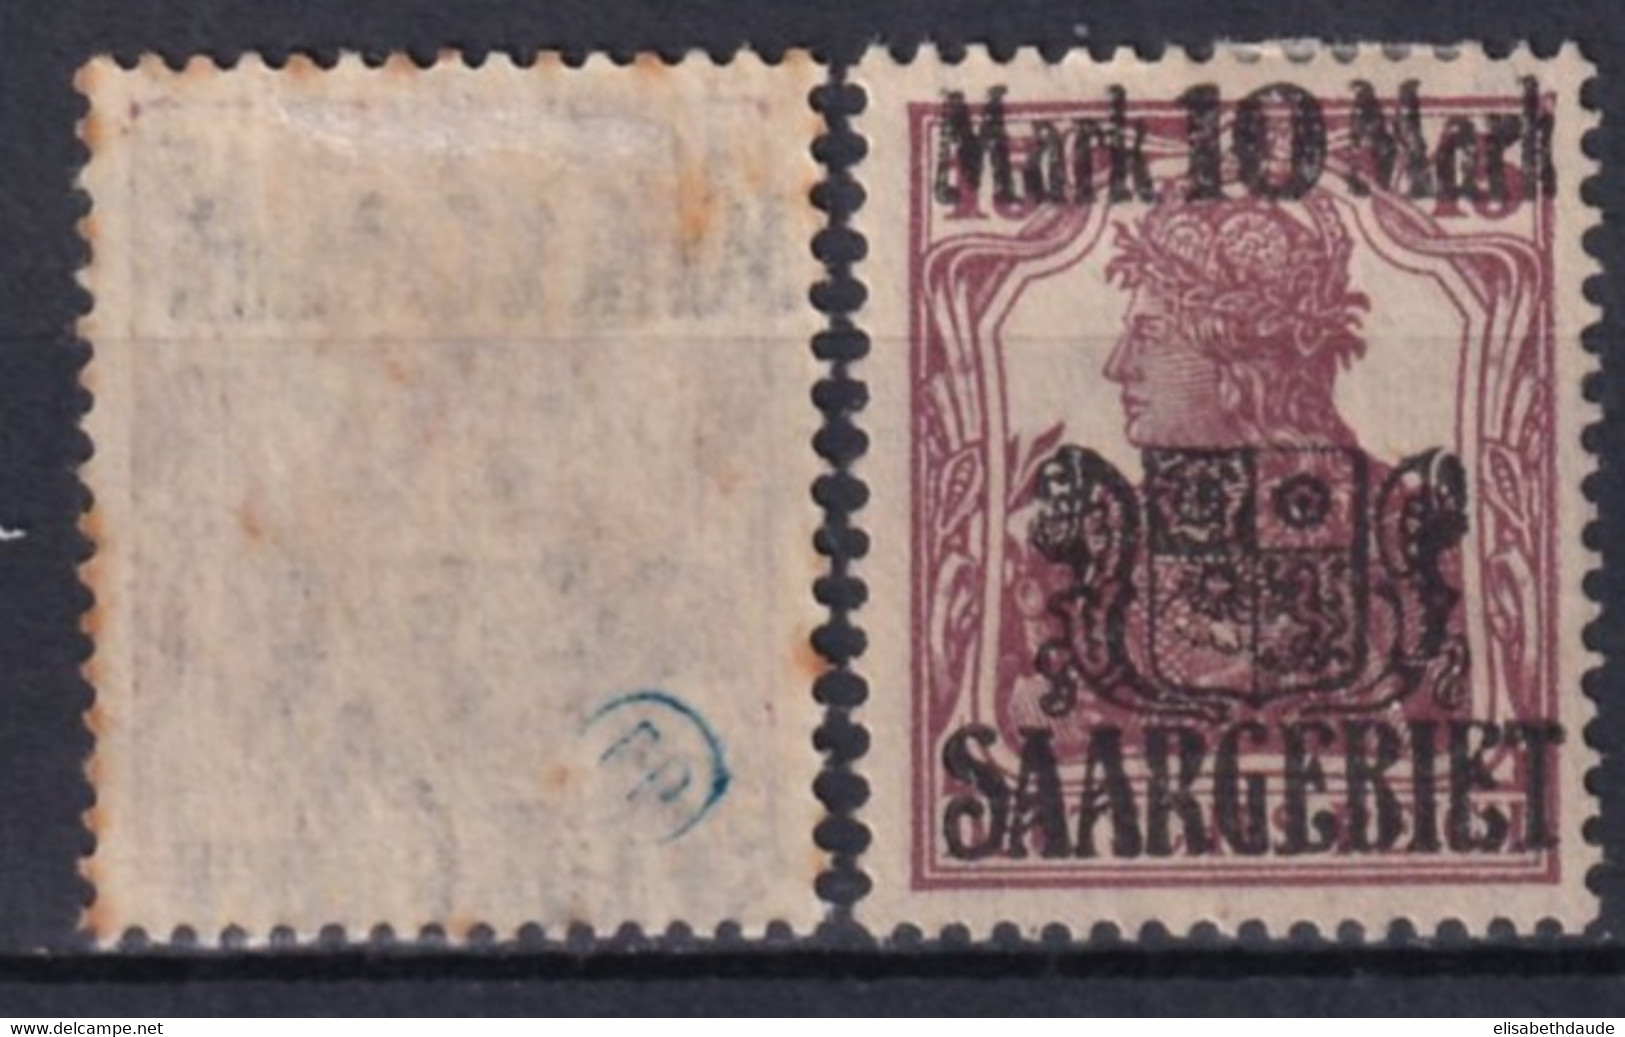 SAAR - 1921 - YVERT N° 52 X 2 Dont 1 Avec VARIETE SURCHARGE RECTO-VERSO * ! - Unused Stamps